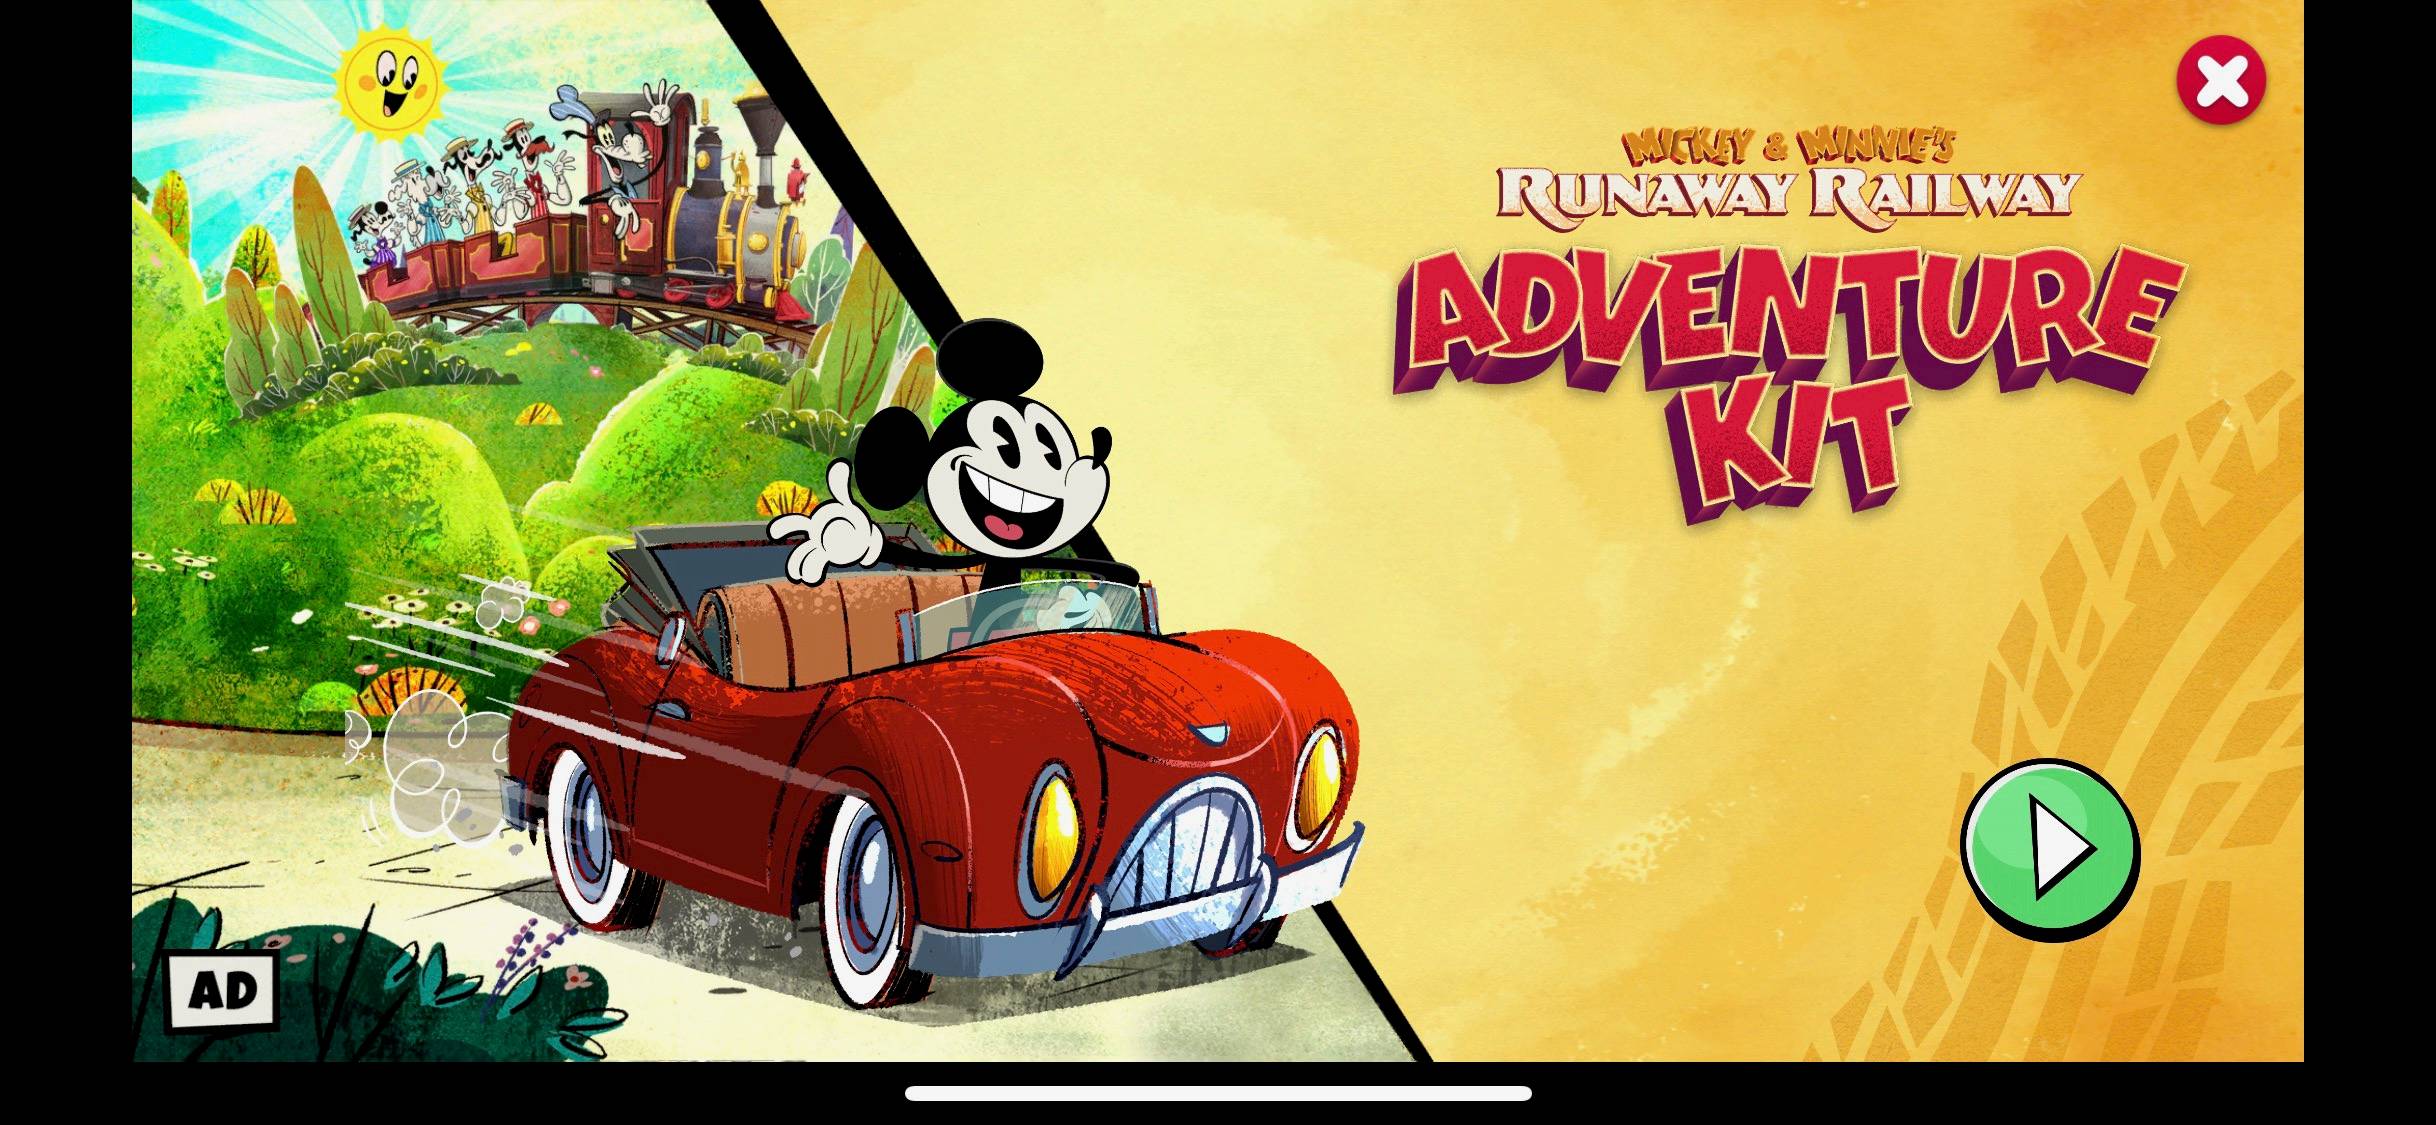 Mickey and Minnie's Runaway Railway Adventure Kit